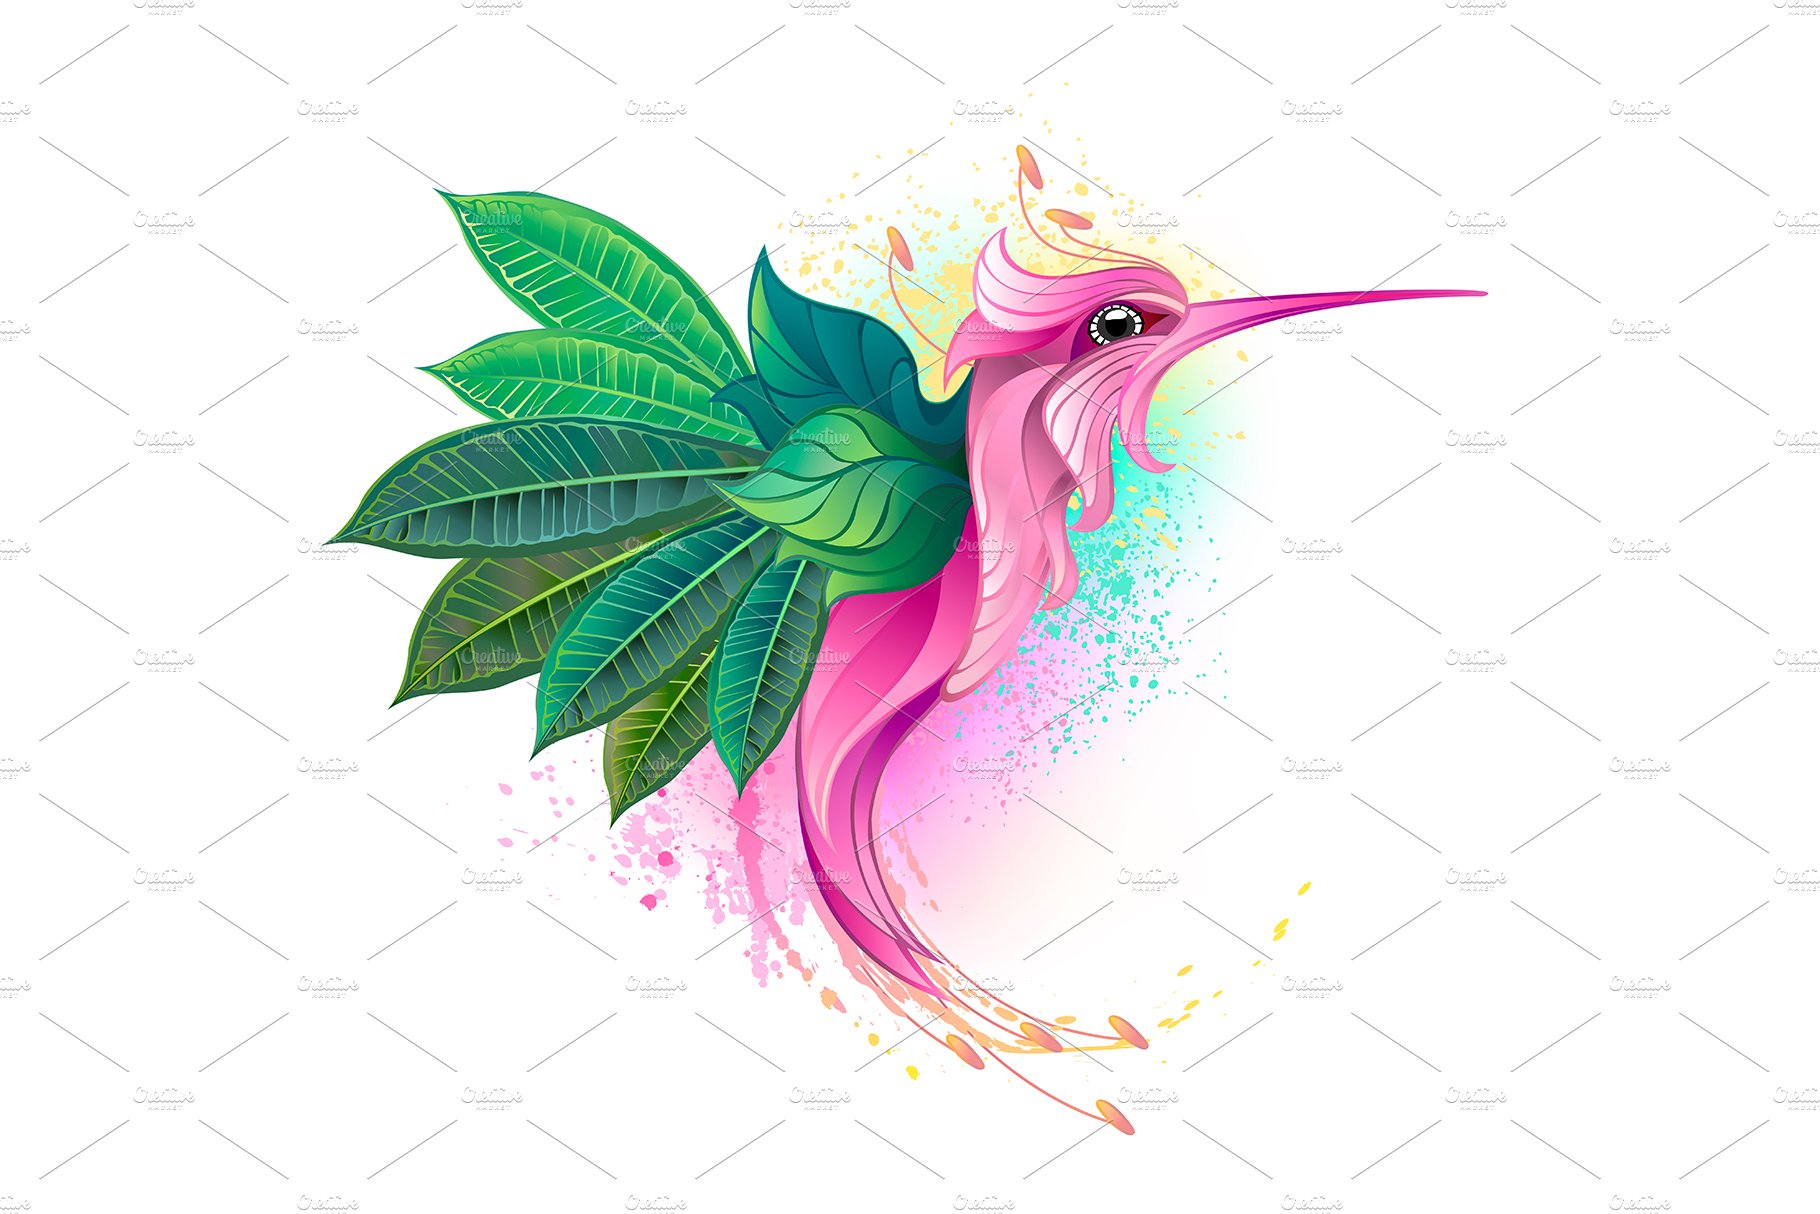 Hummingbird Flower cover image.